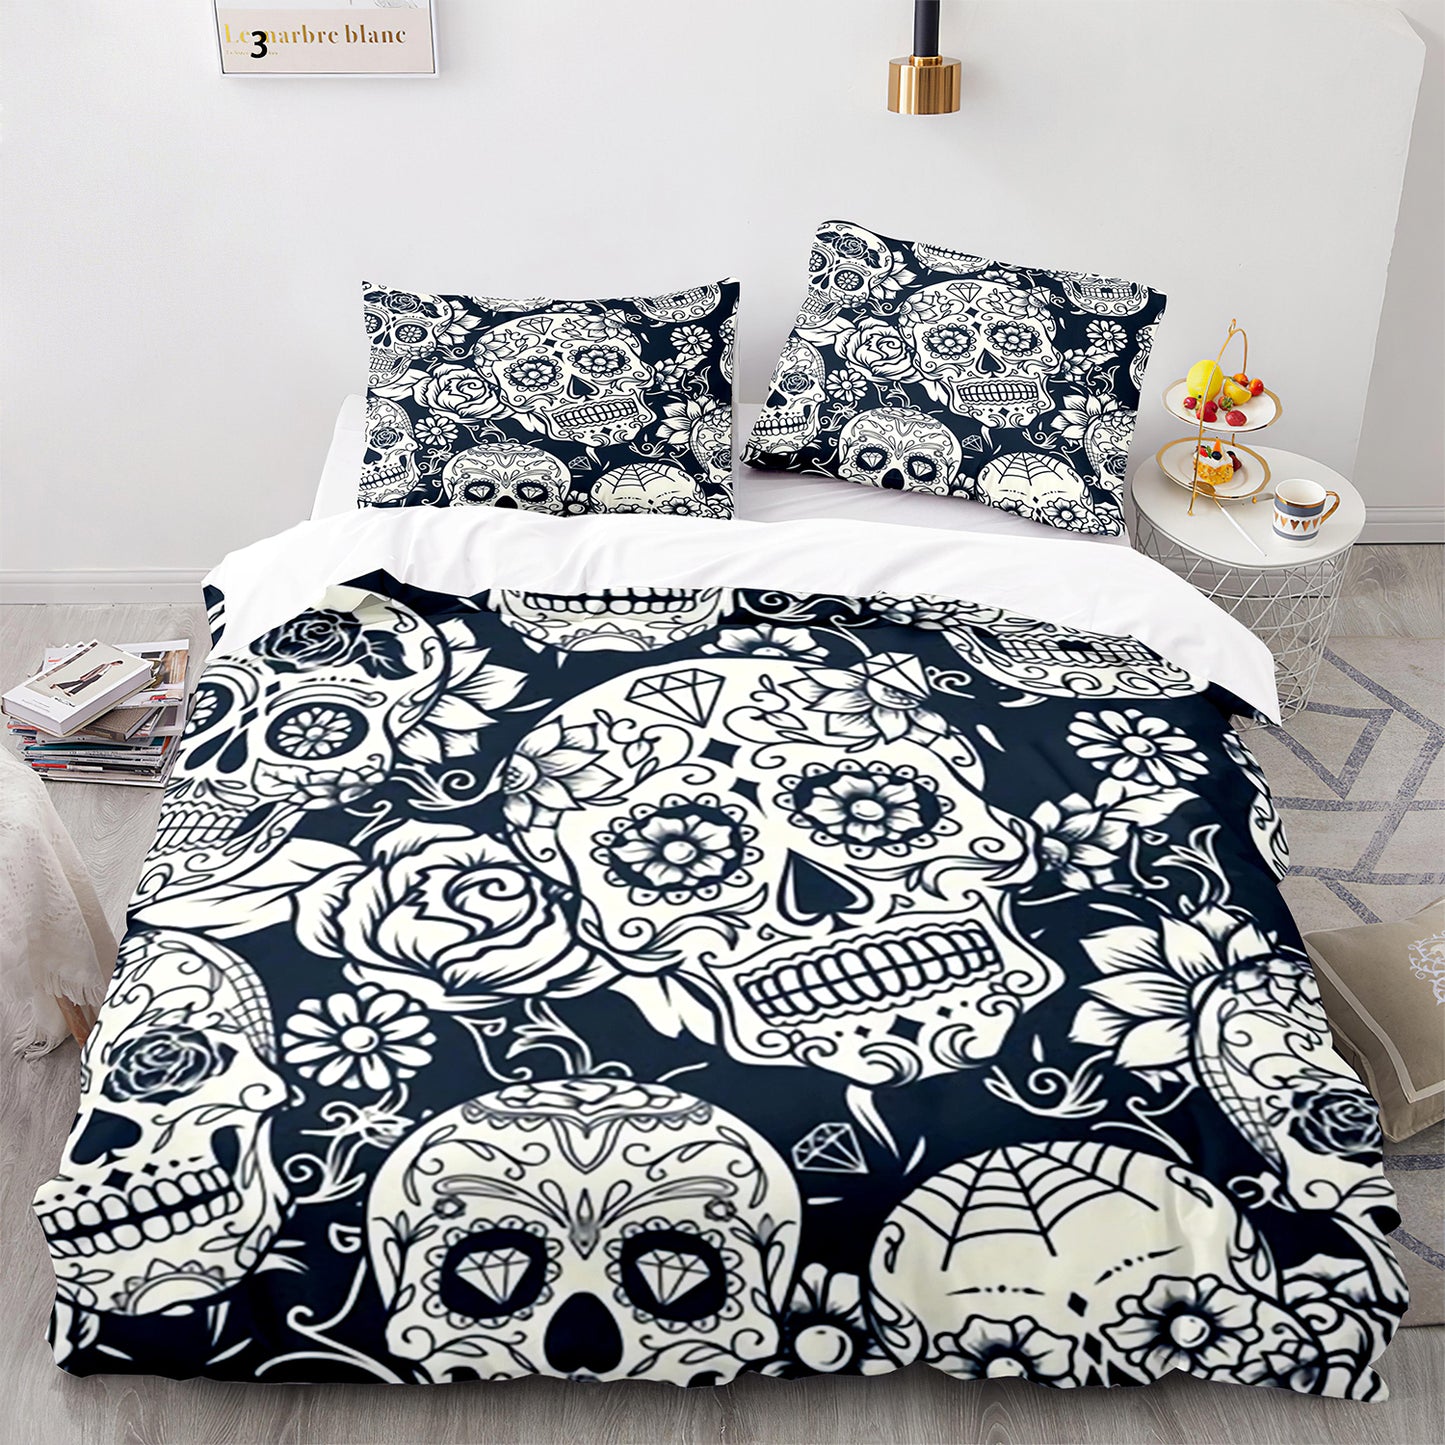 Fantasy Skeleton Twin Size 4 Pcs Comforter And Bed Sheet Set